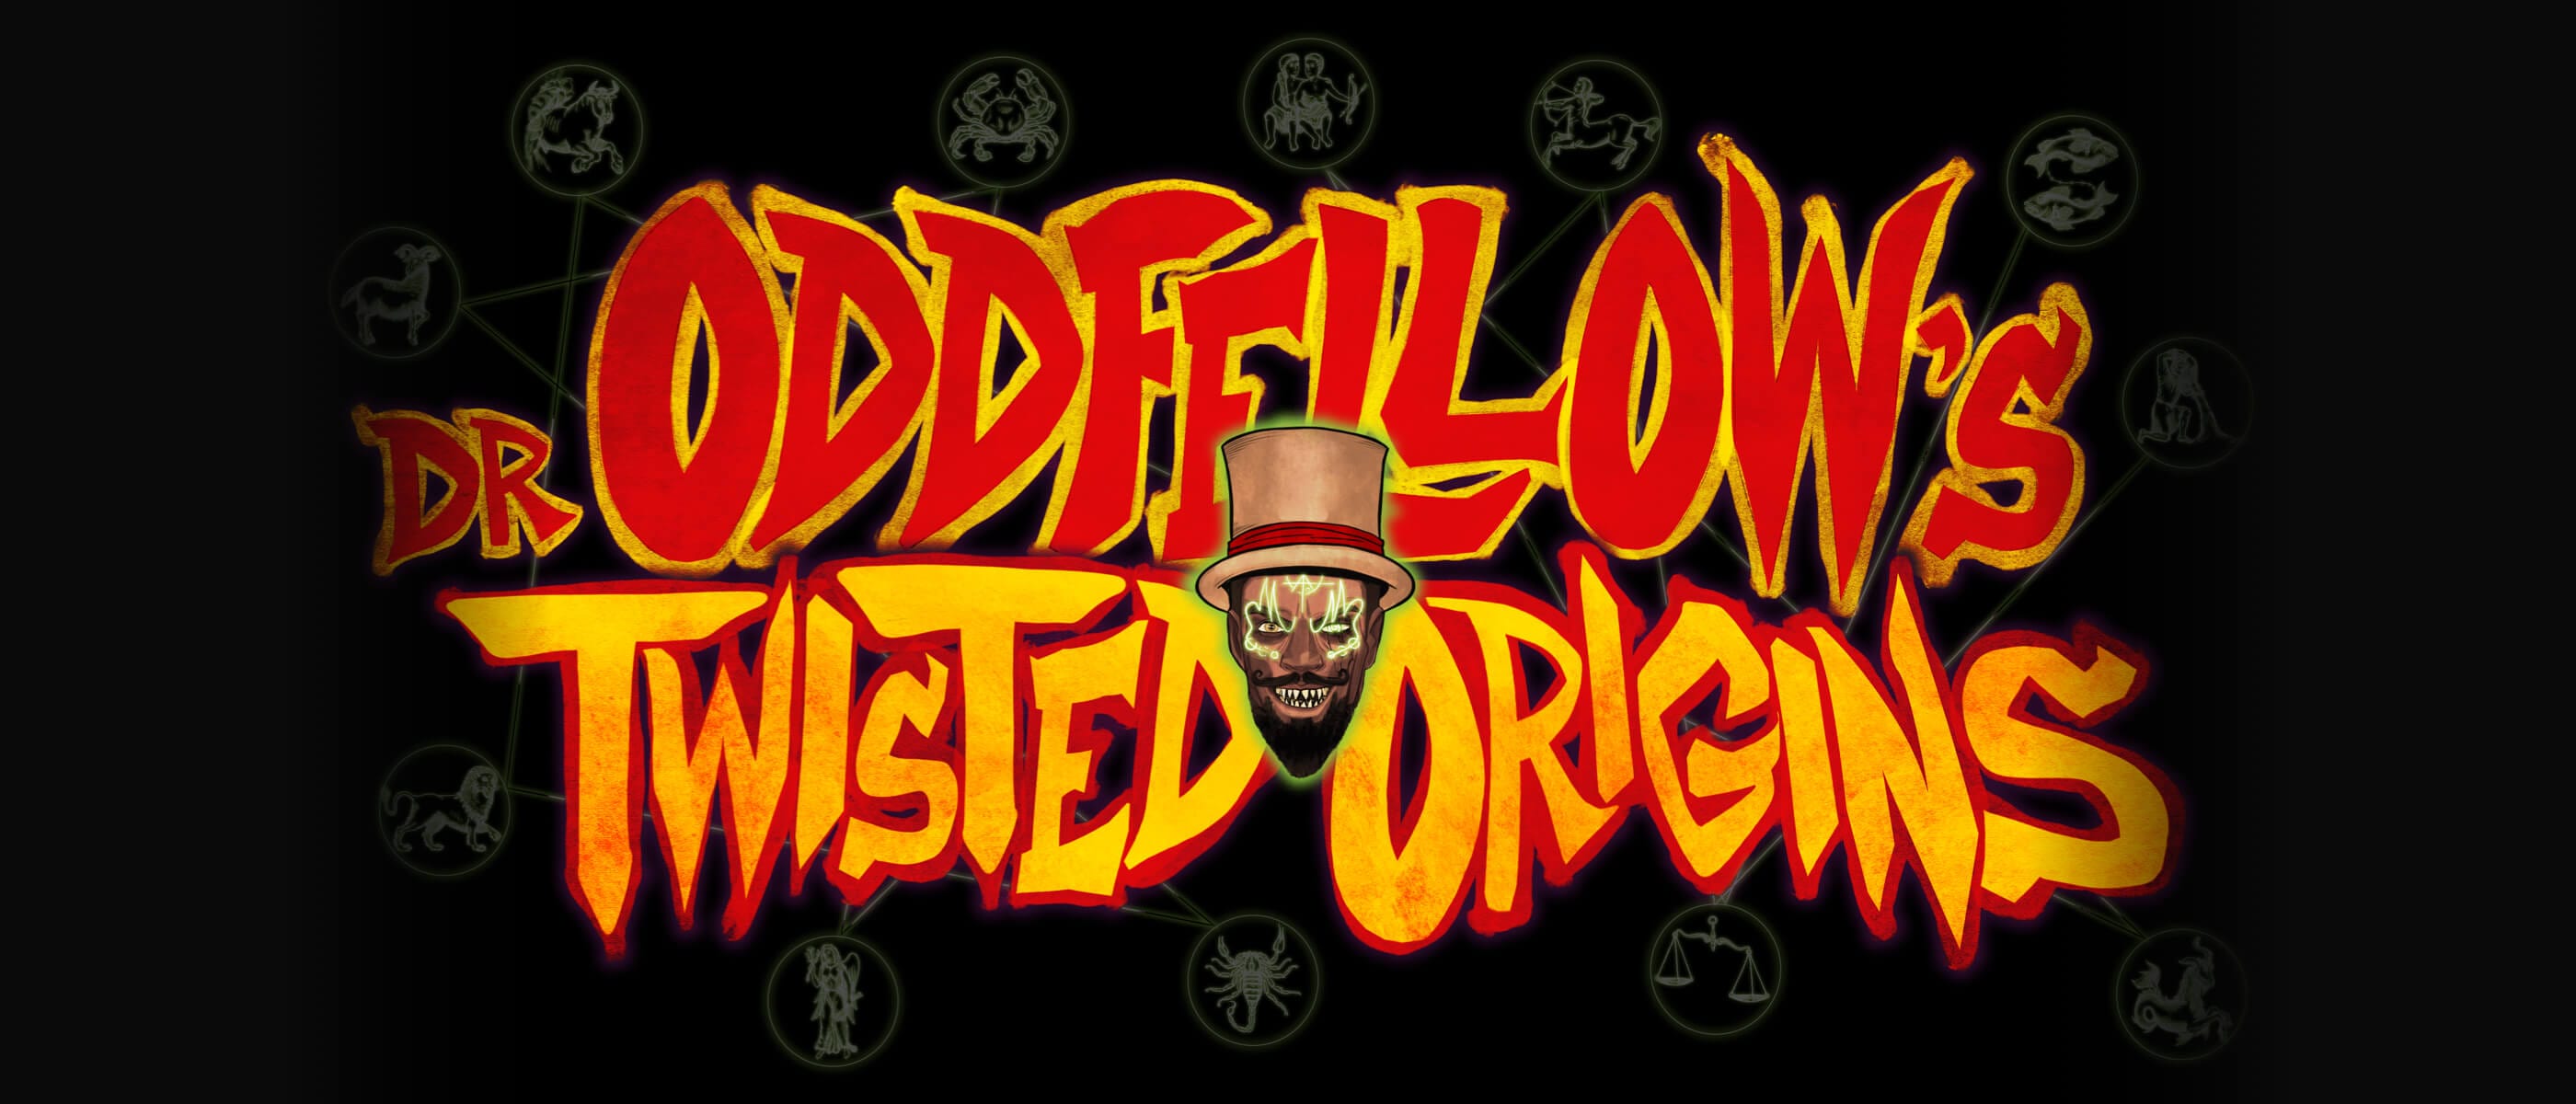 Dr. Oddfellow's Twisted Origins logo